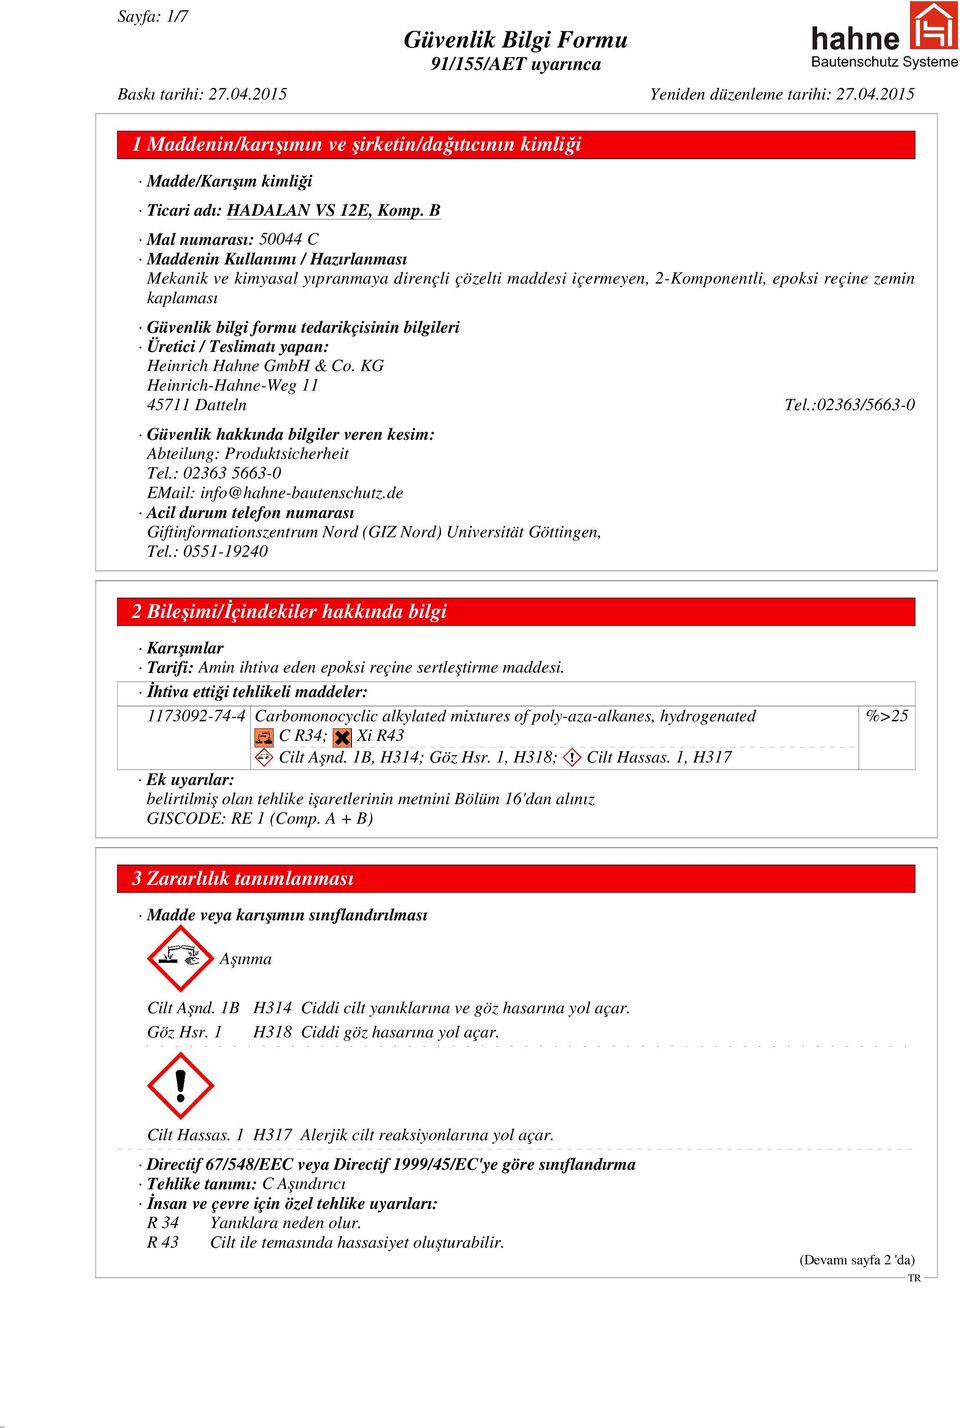 :02363/5663-0 Güvenlik hakkında bilgiler veren kesim: Abteilung: Produktsicherheit Tel.: 02363 5663-0 EMail: info@hahne-bautenschutz.